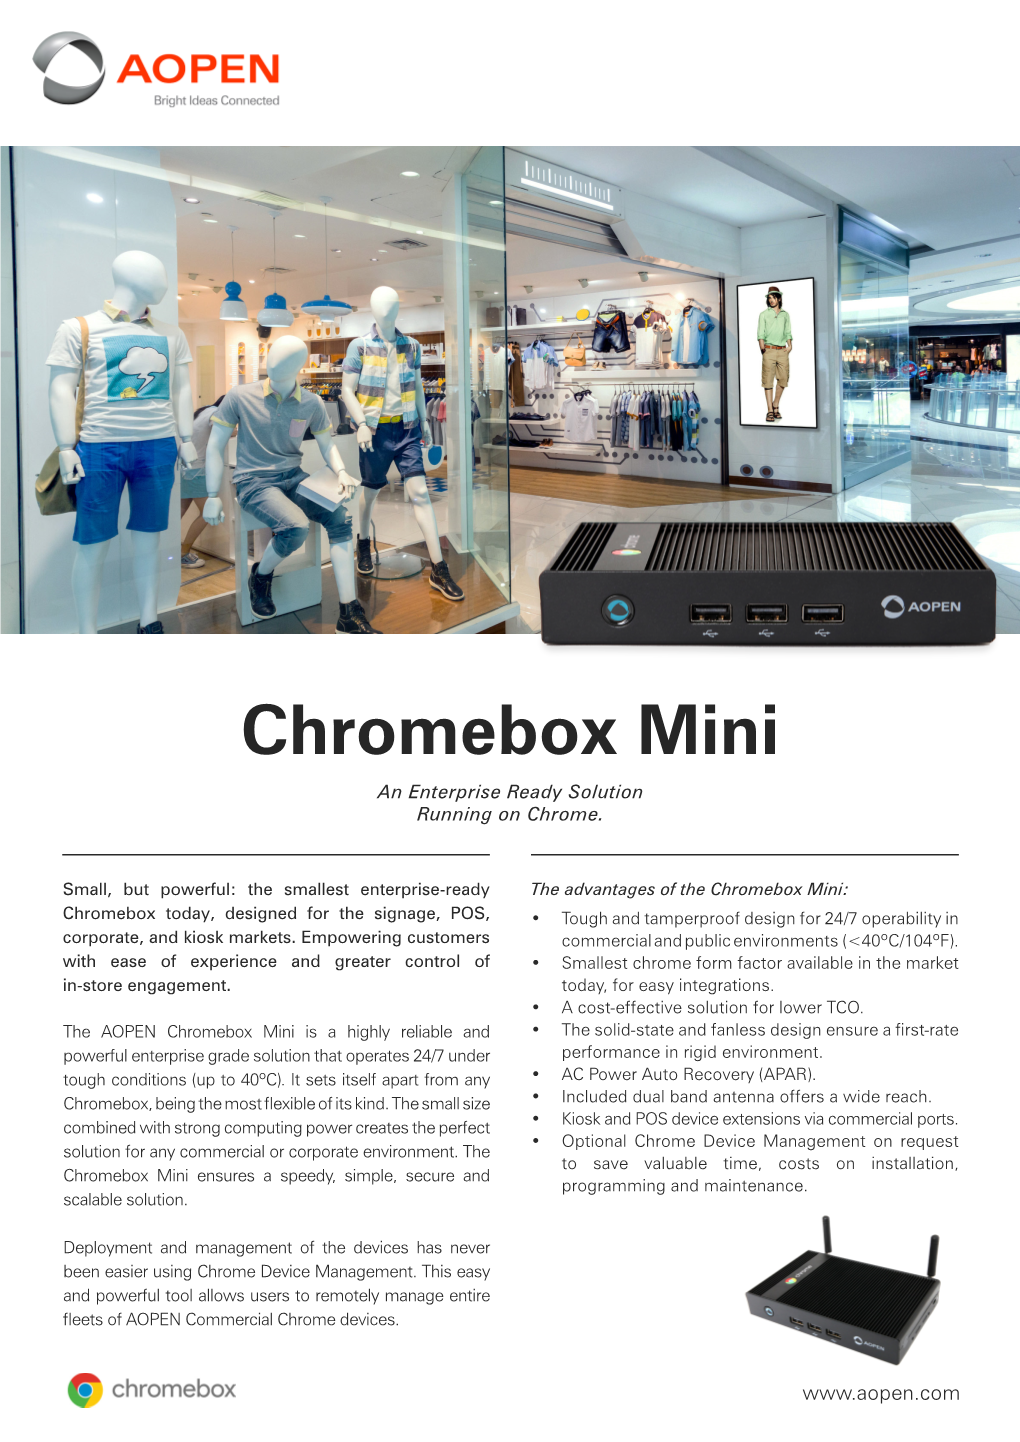 Chromebox Mini an Enterprise Ready Solution Running on Chrome